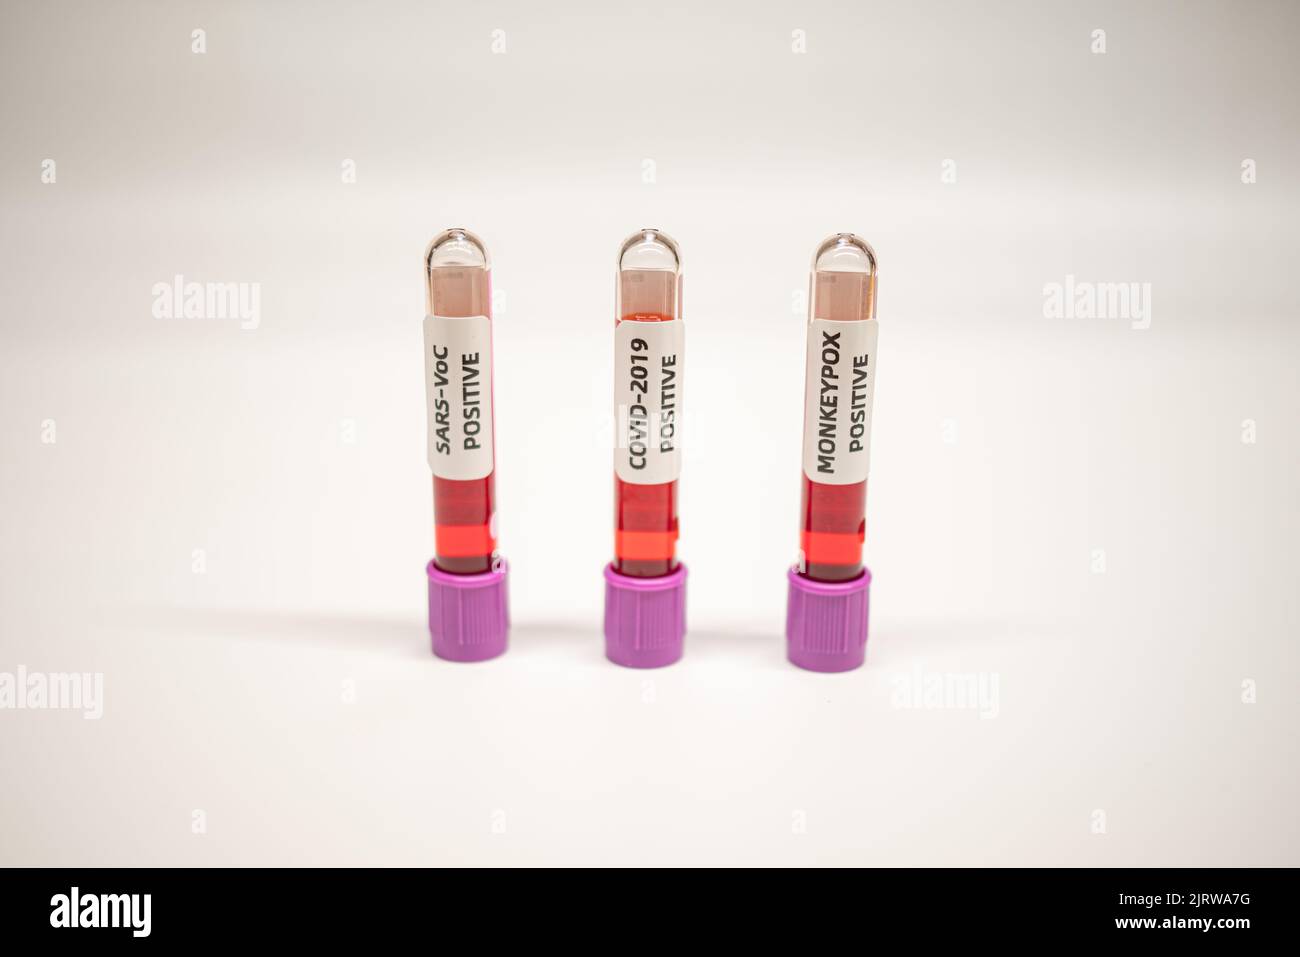 COVID-19,SARS,MONKEYPOX positive,Blood test Stock Photo